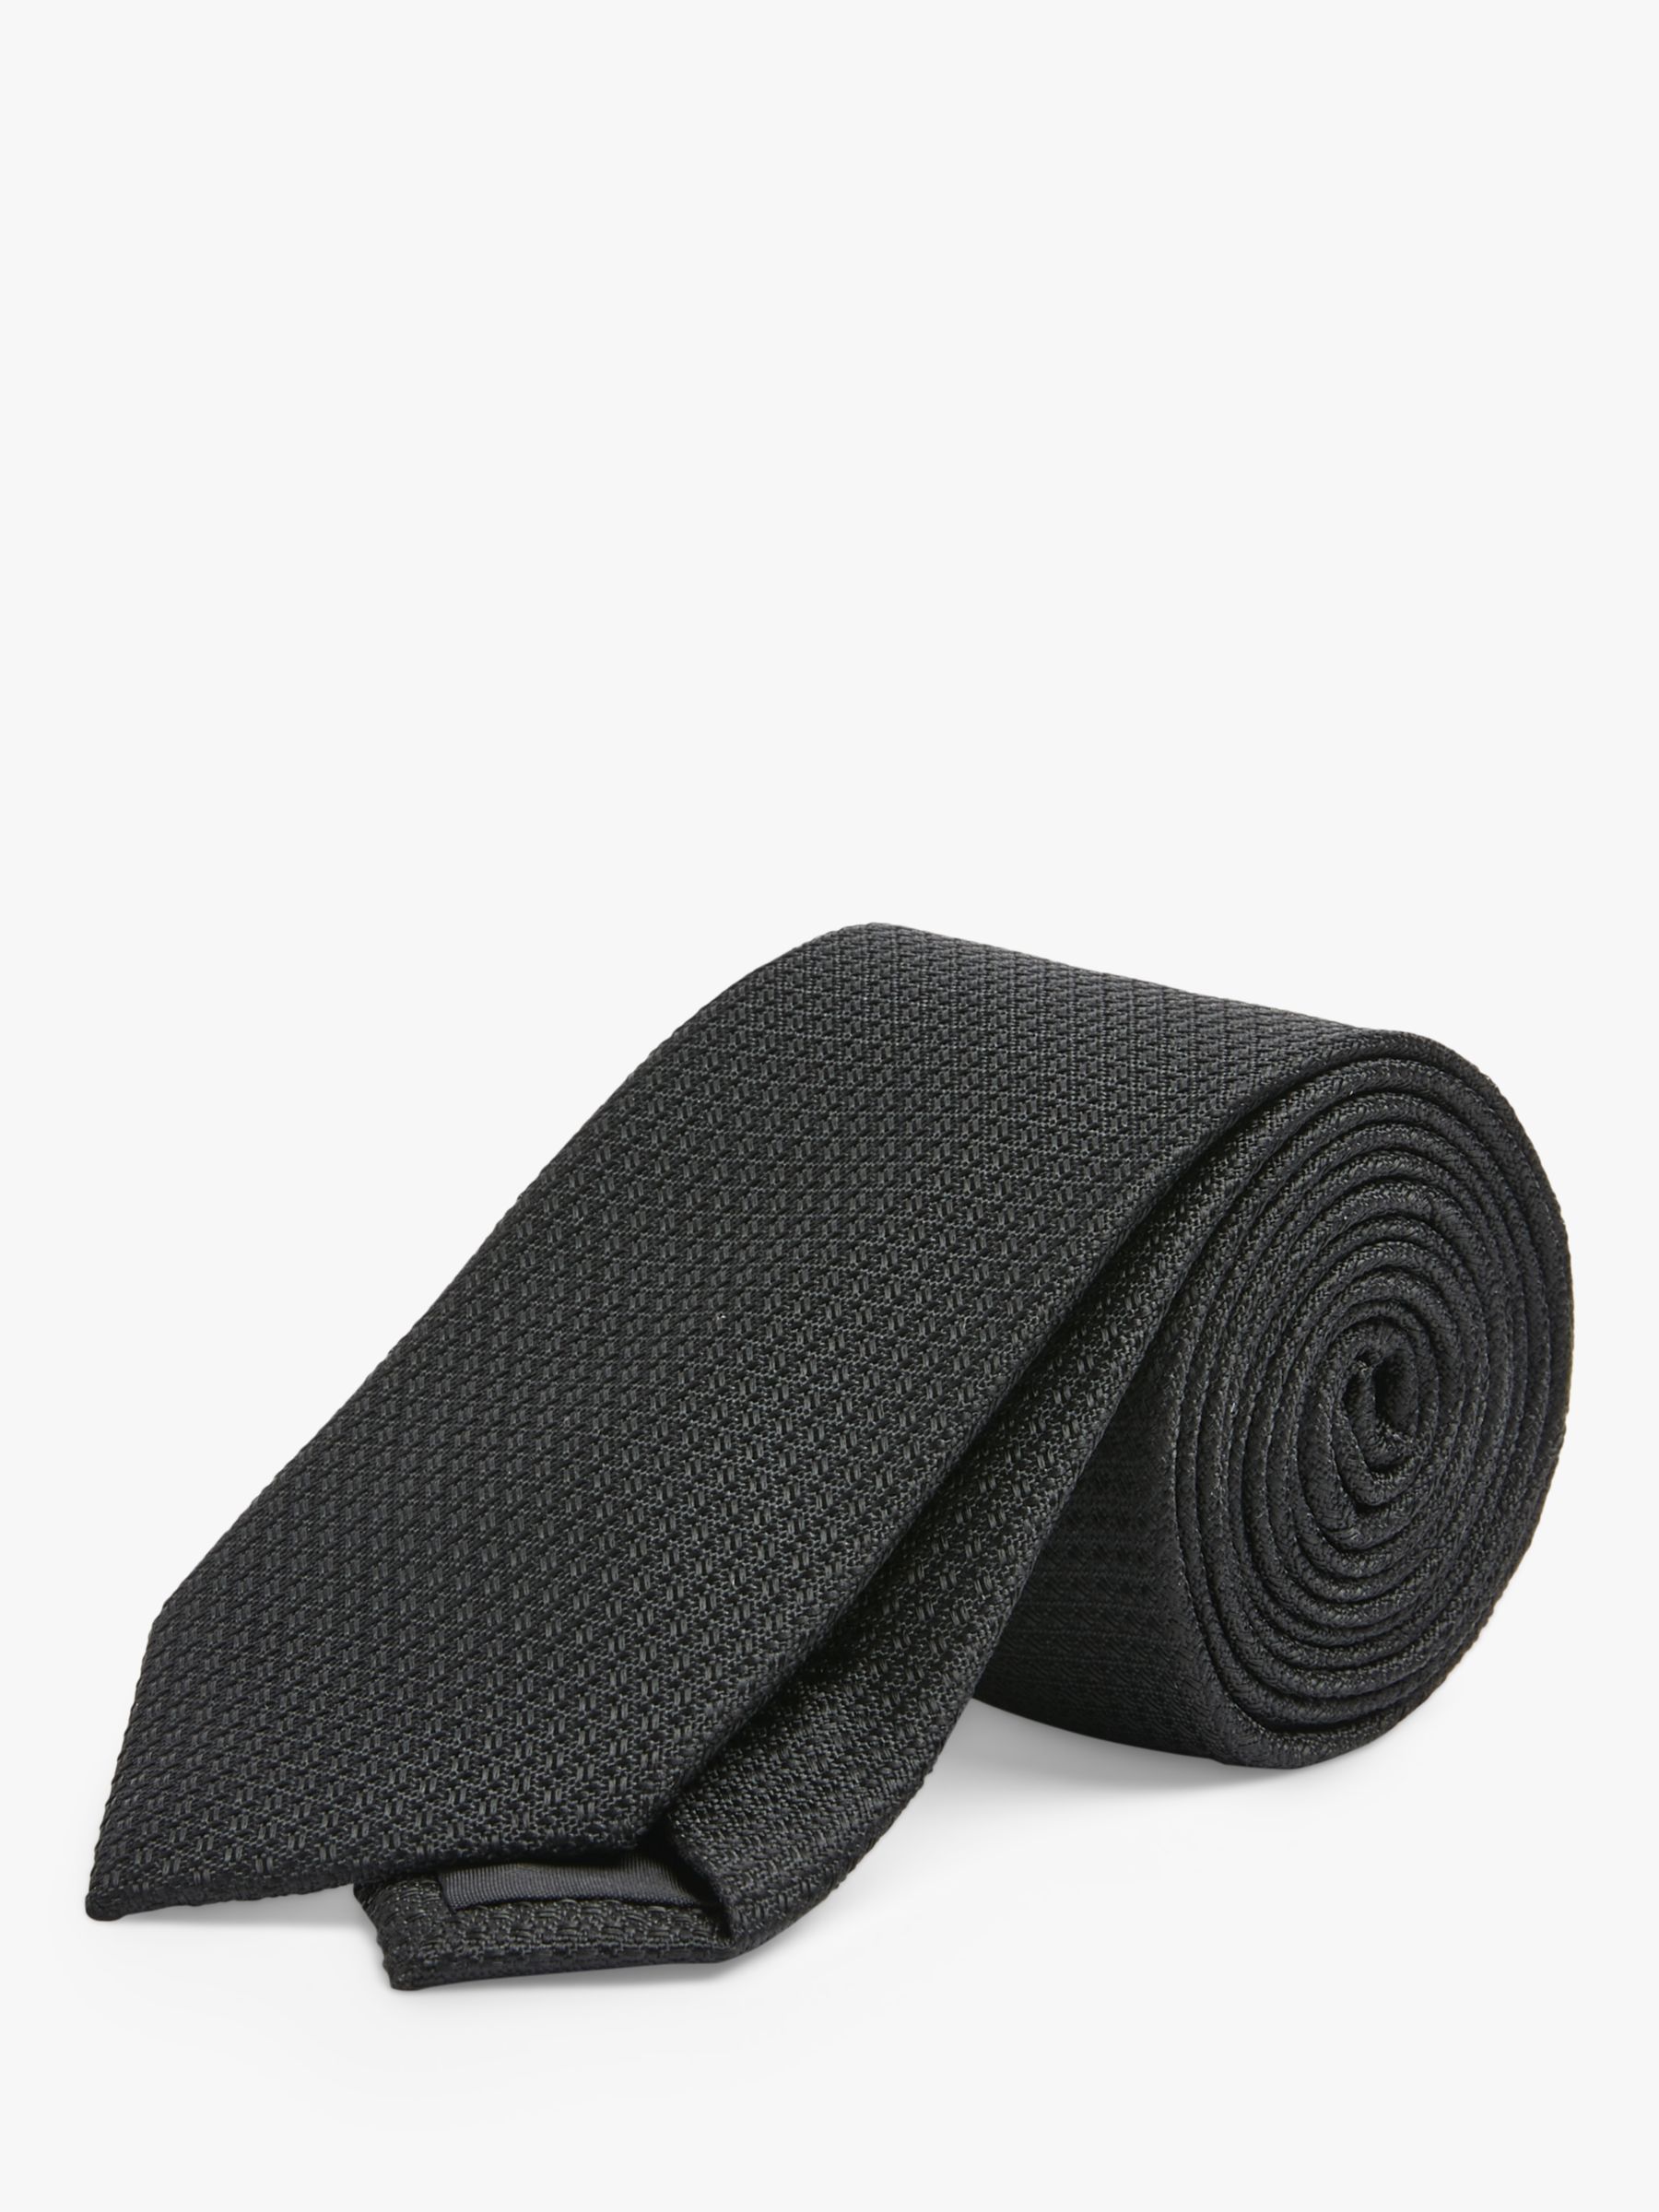 Moss Textured Tie, Black at John Lewis & Partners